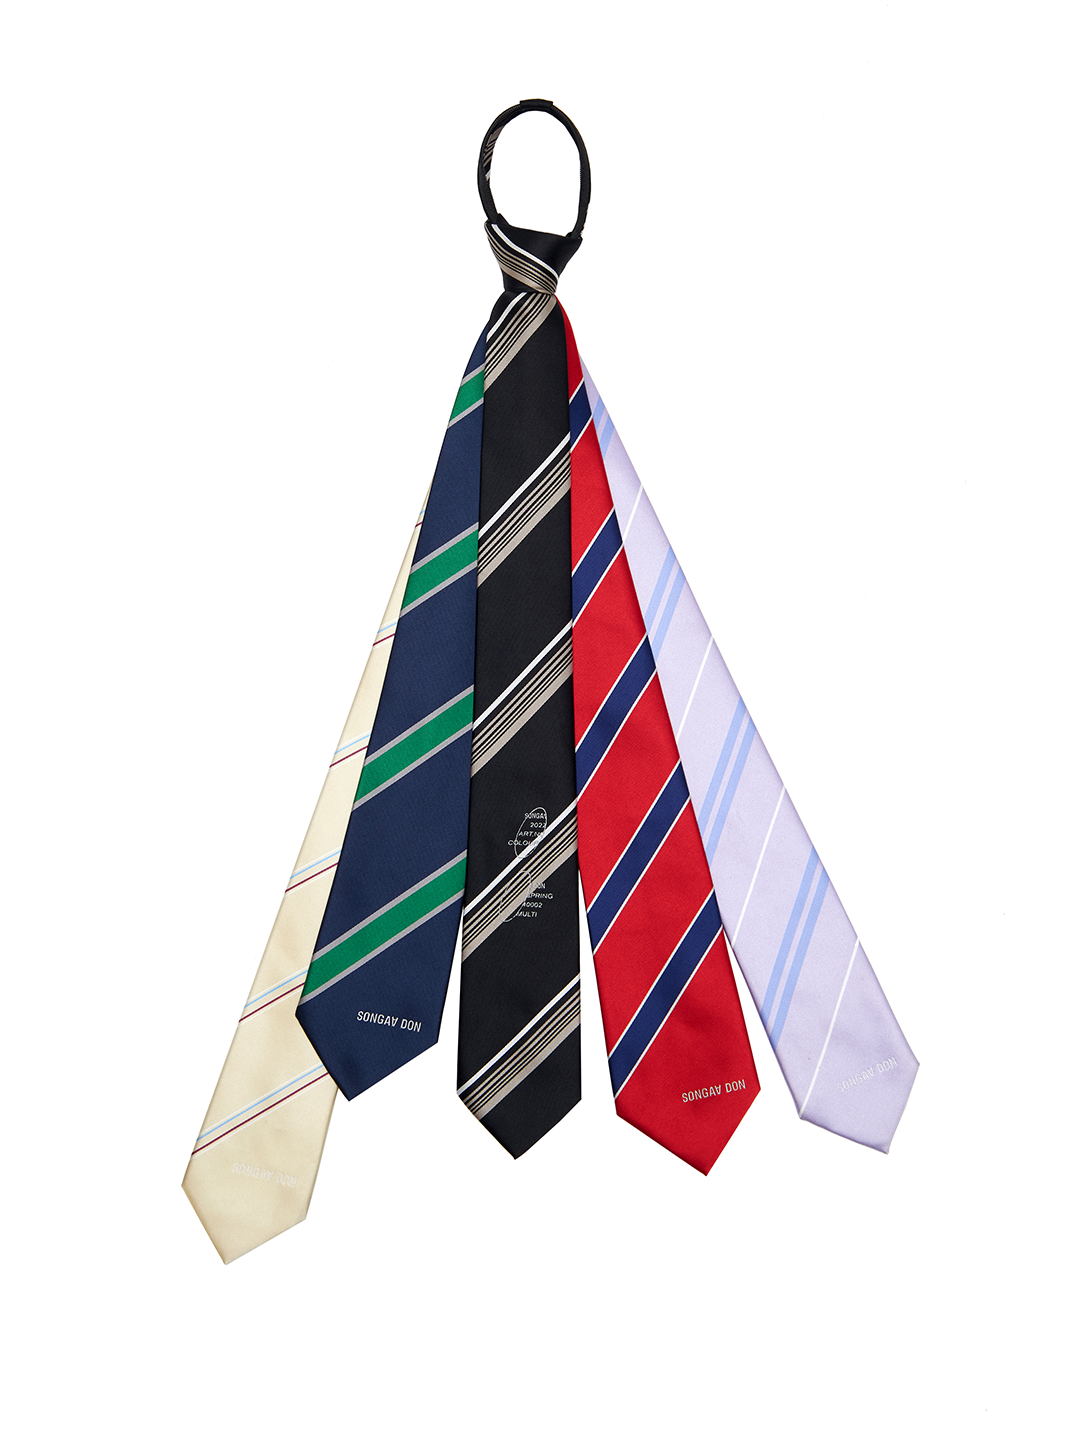 Five-color five-in-one tie